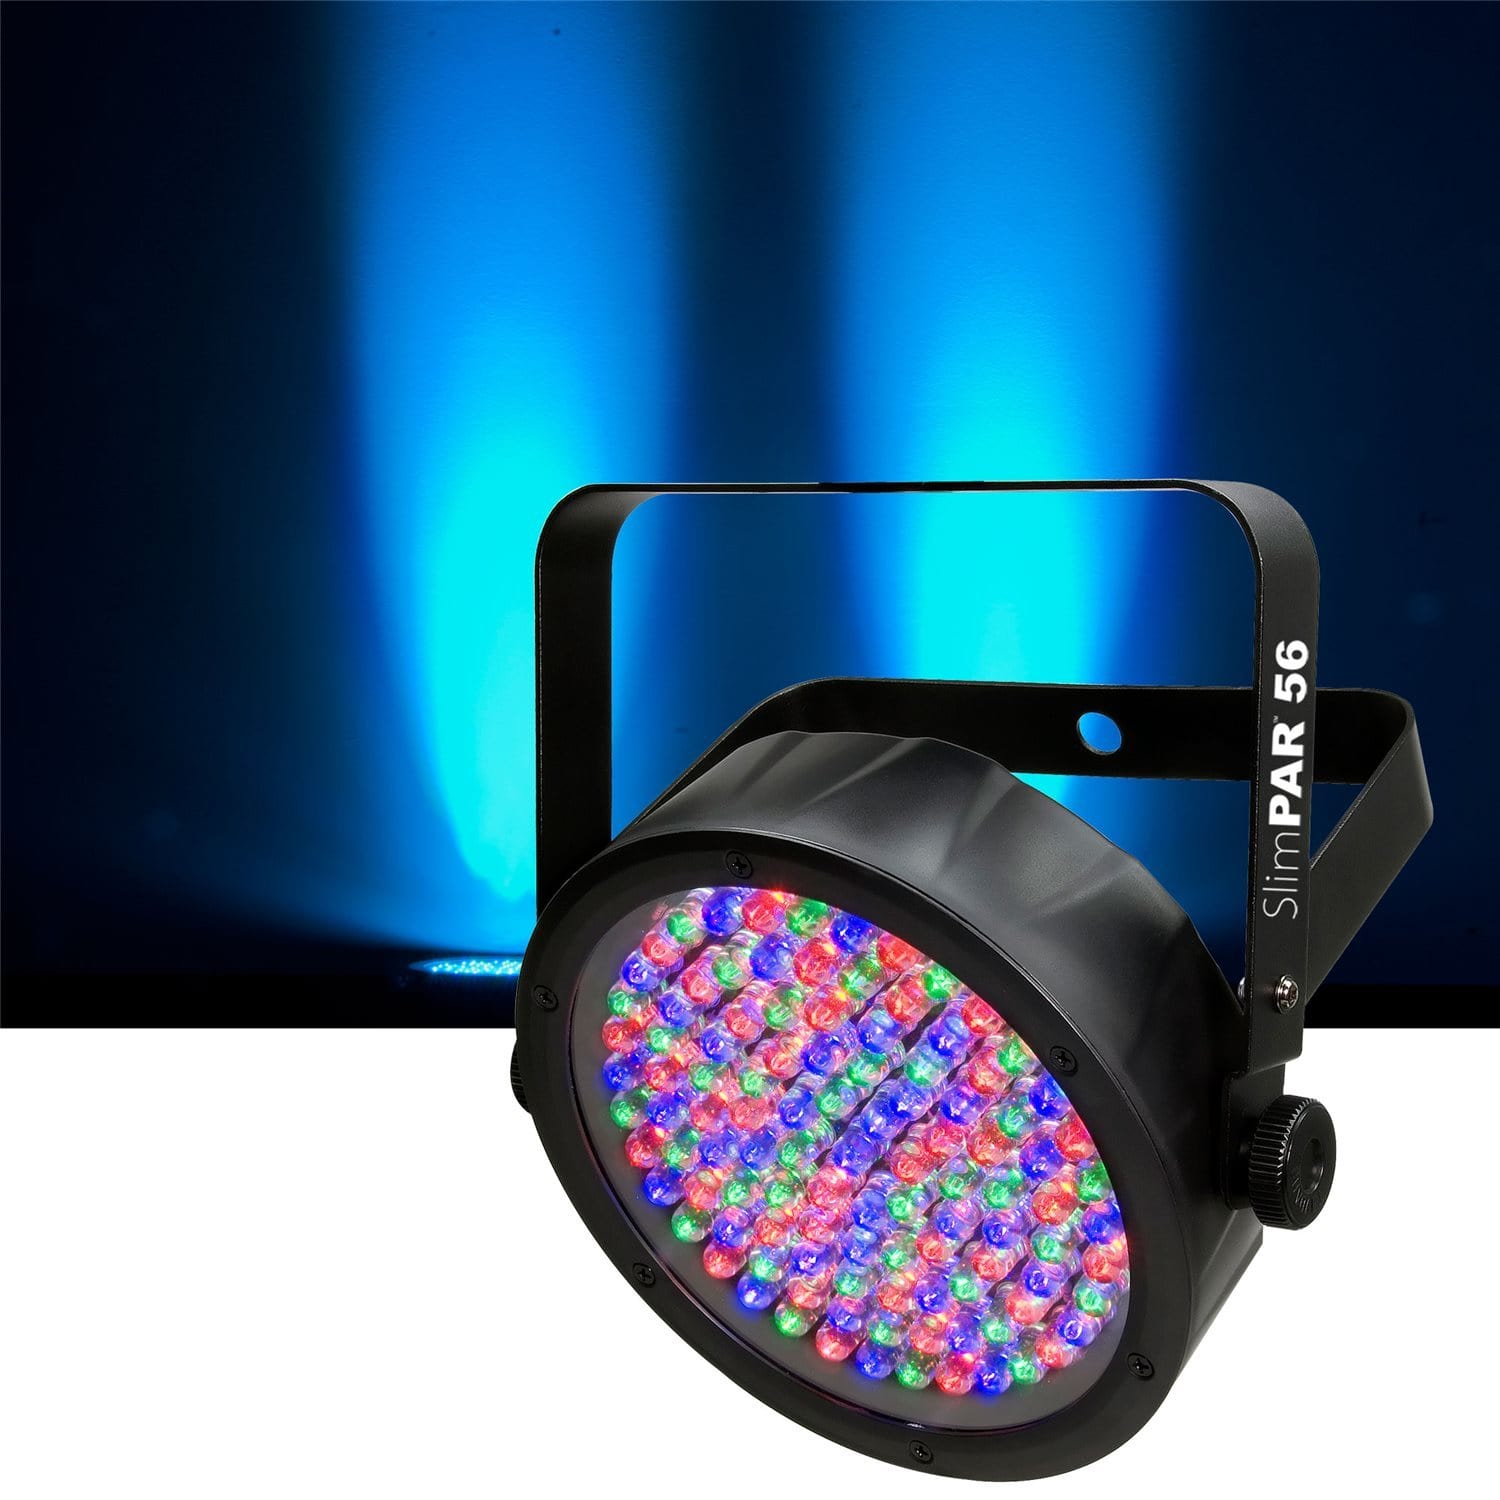 Chauvet SlimPAR 56 RGB Wash Light 4-Pack with Accessories & Gator Bag - PSSL ProSound and Stage Lighting